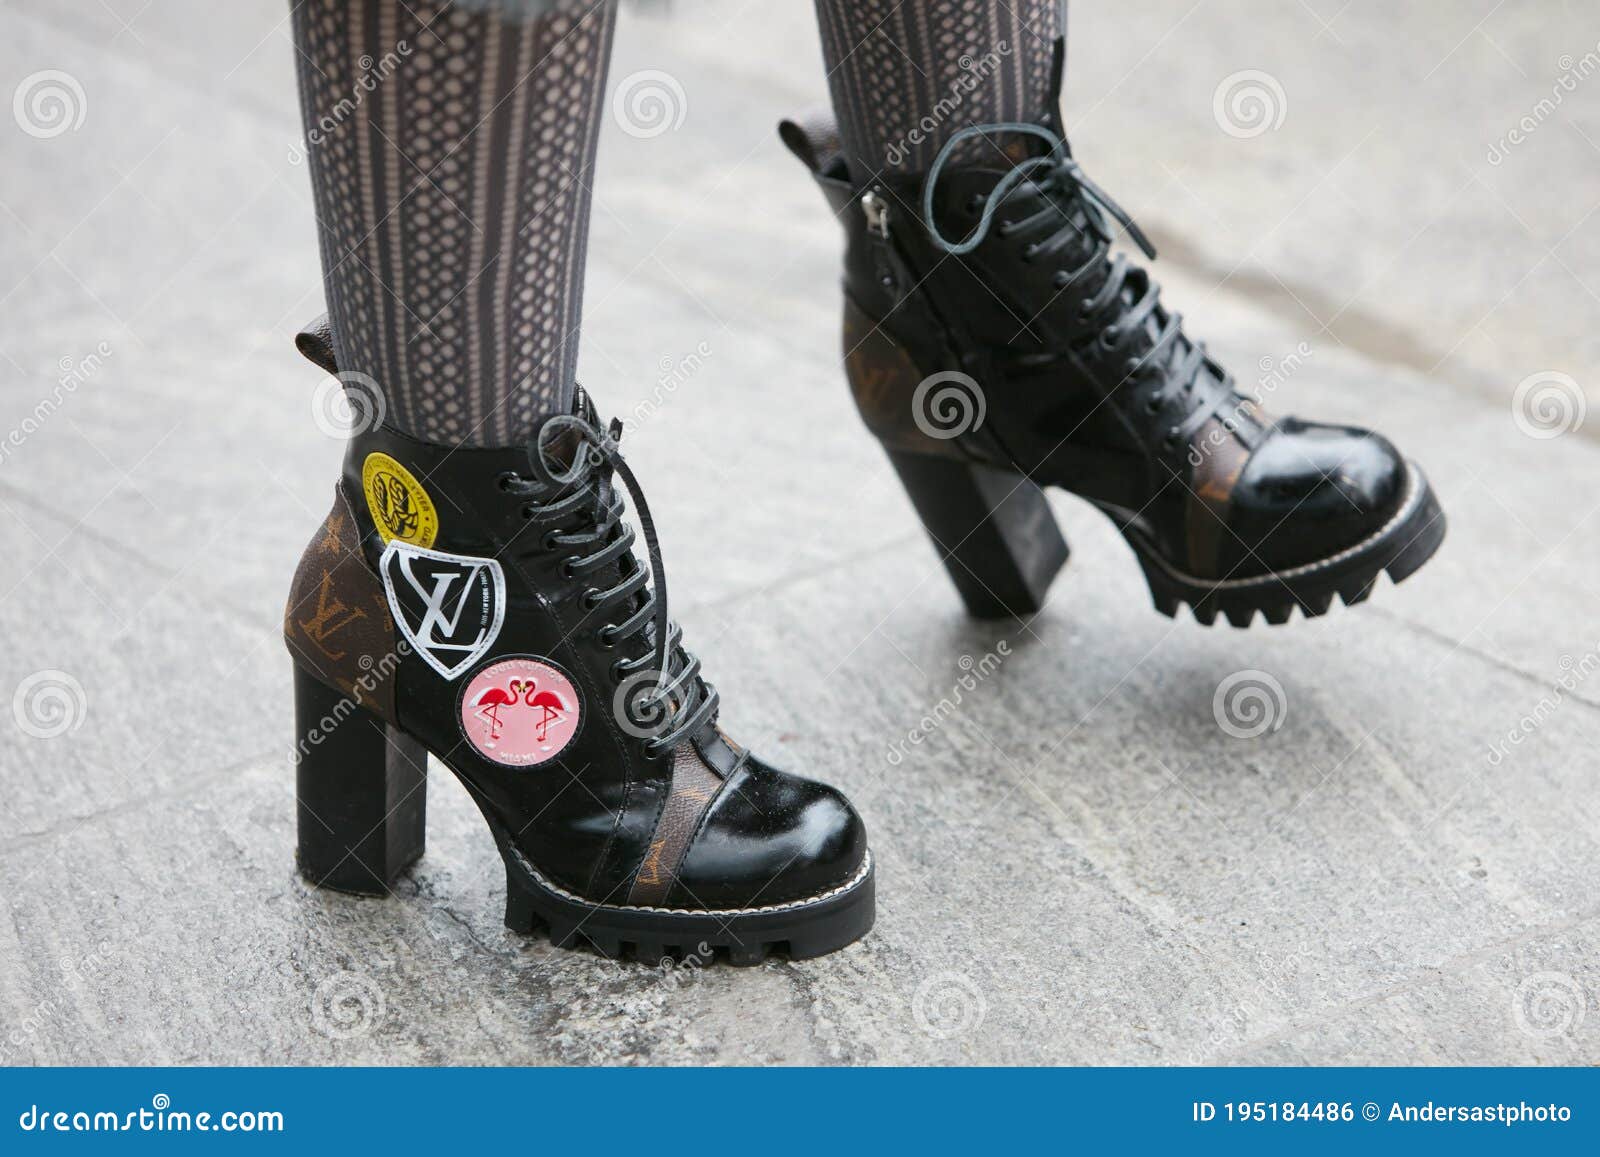 louis vuitton boots for girls